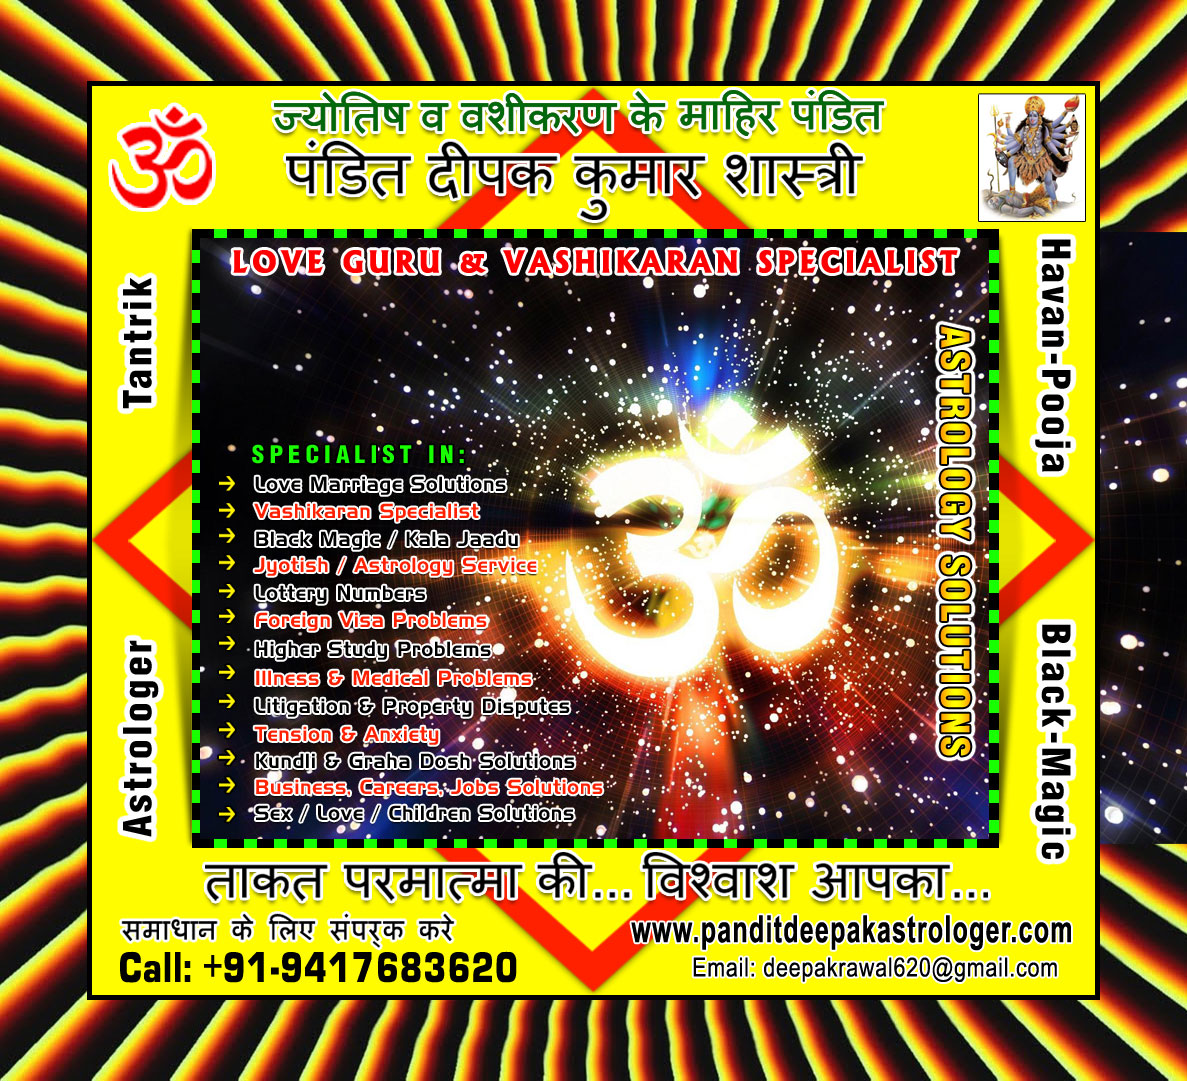 Pandit Deepak Kumar Astrologer,Hoshiarpur,Business,Free Classifieds,Post Free Ads,77traders.com